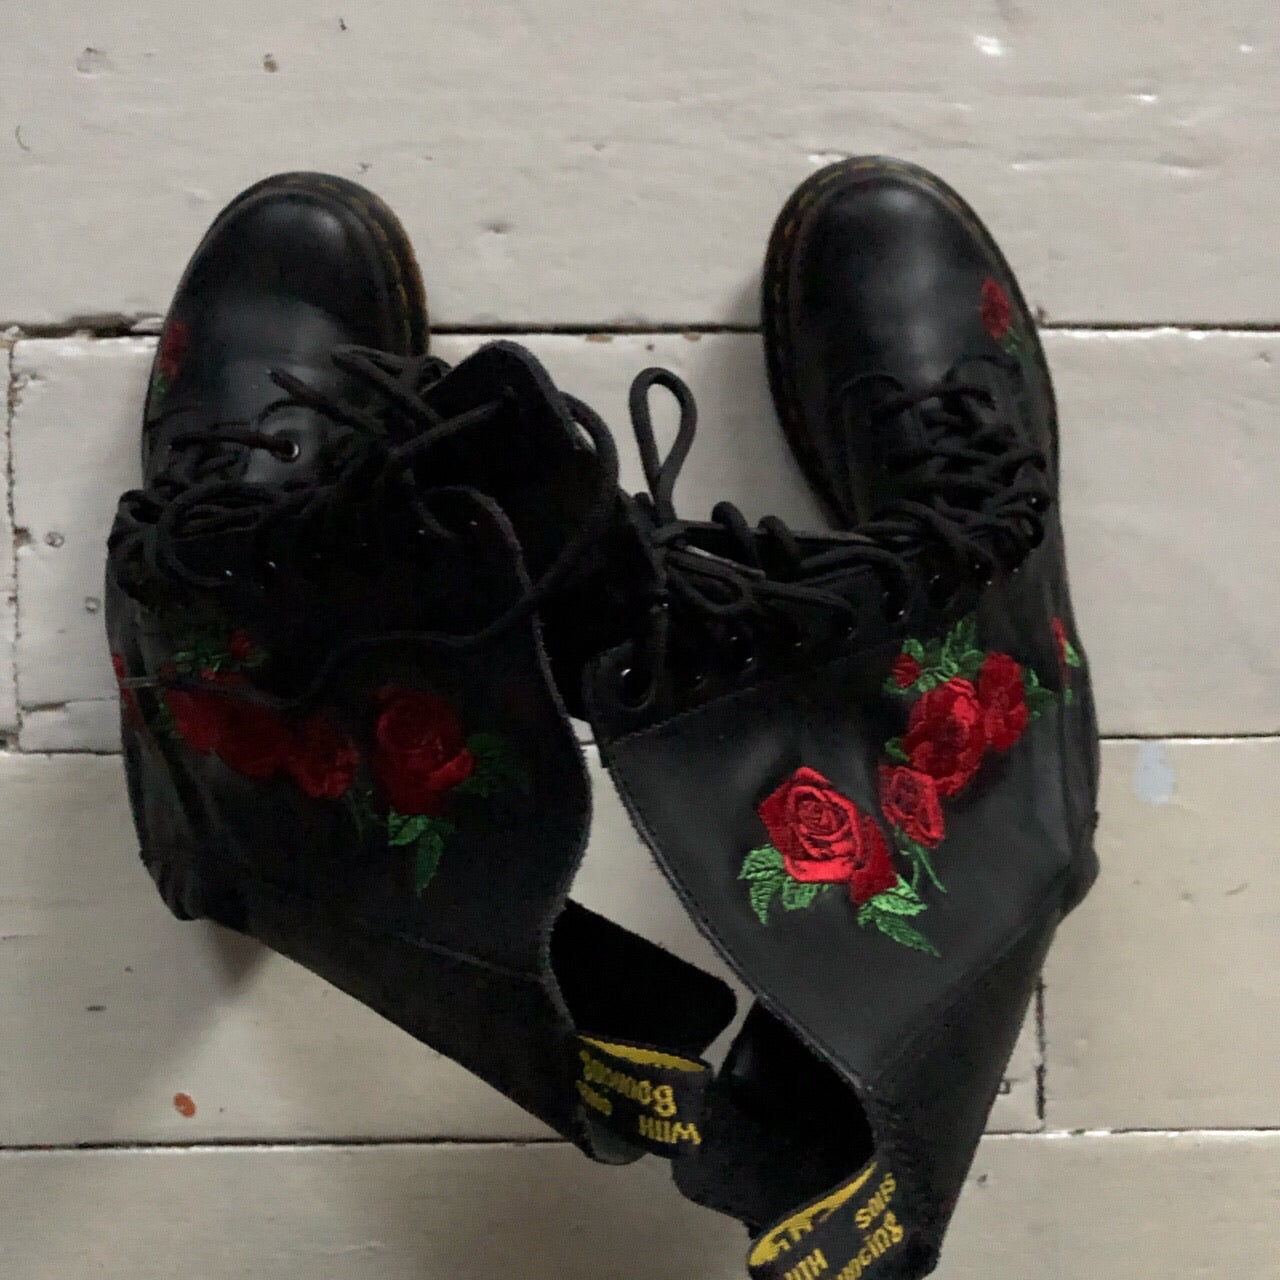 Dr Martens High Floral Embroidered Boots (UK 5)